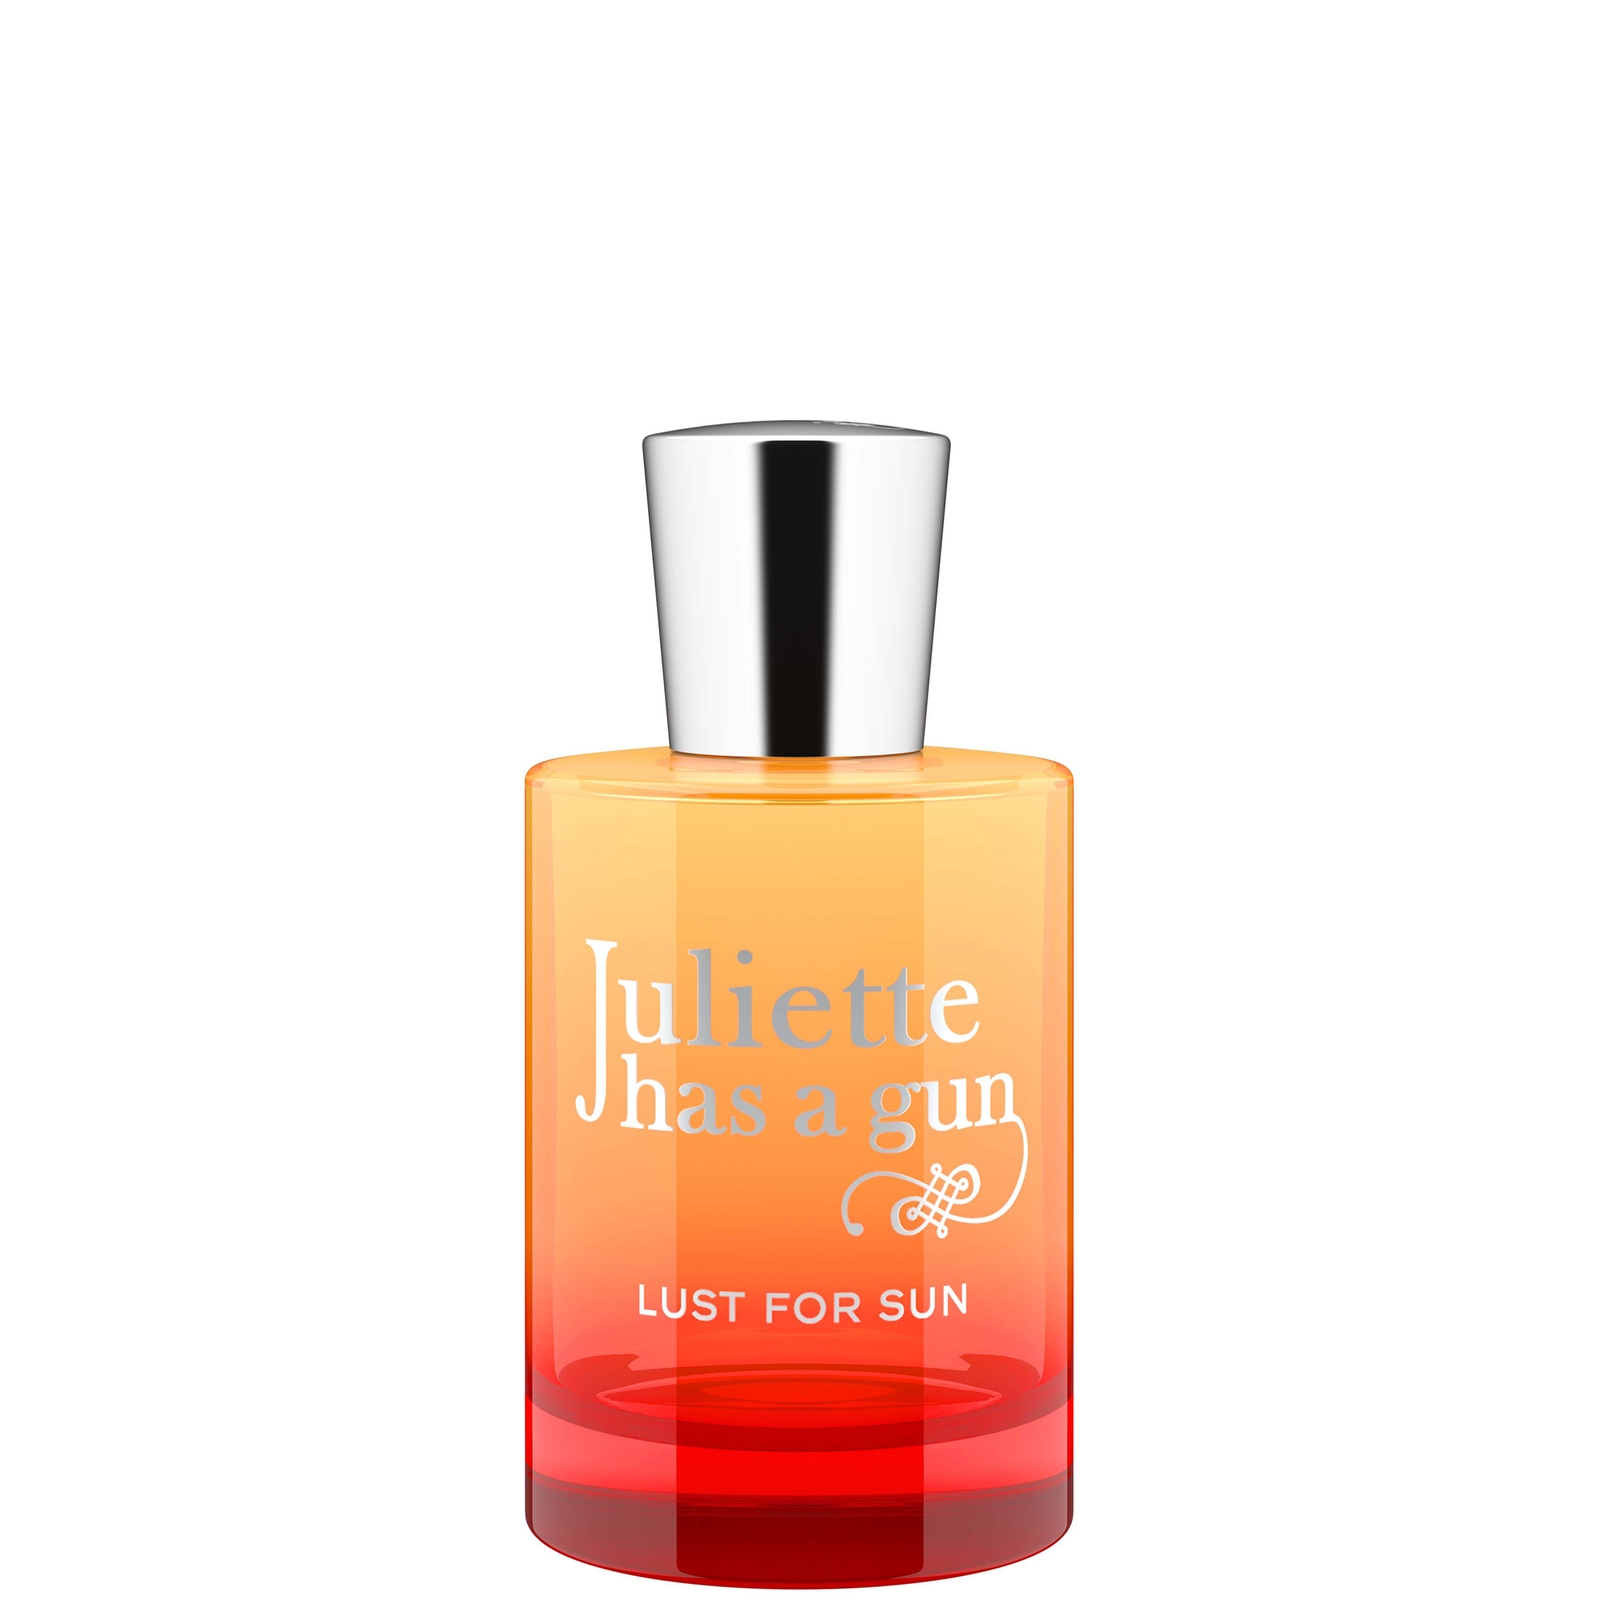 Photos - Women's Fragrance Juliette Has a Gun Lust for Sun Eau de Parfum 50ml JLUST50 